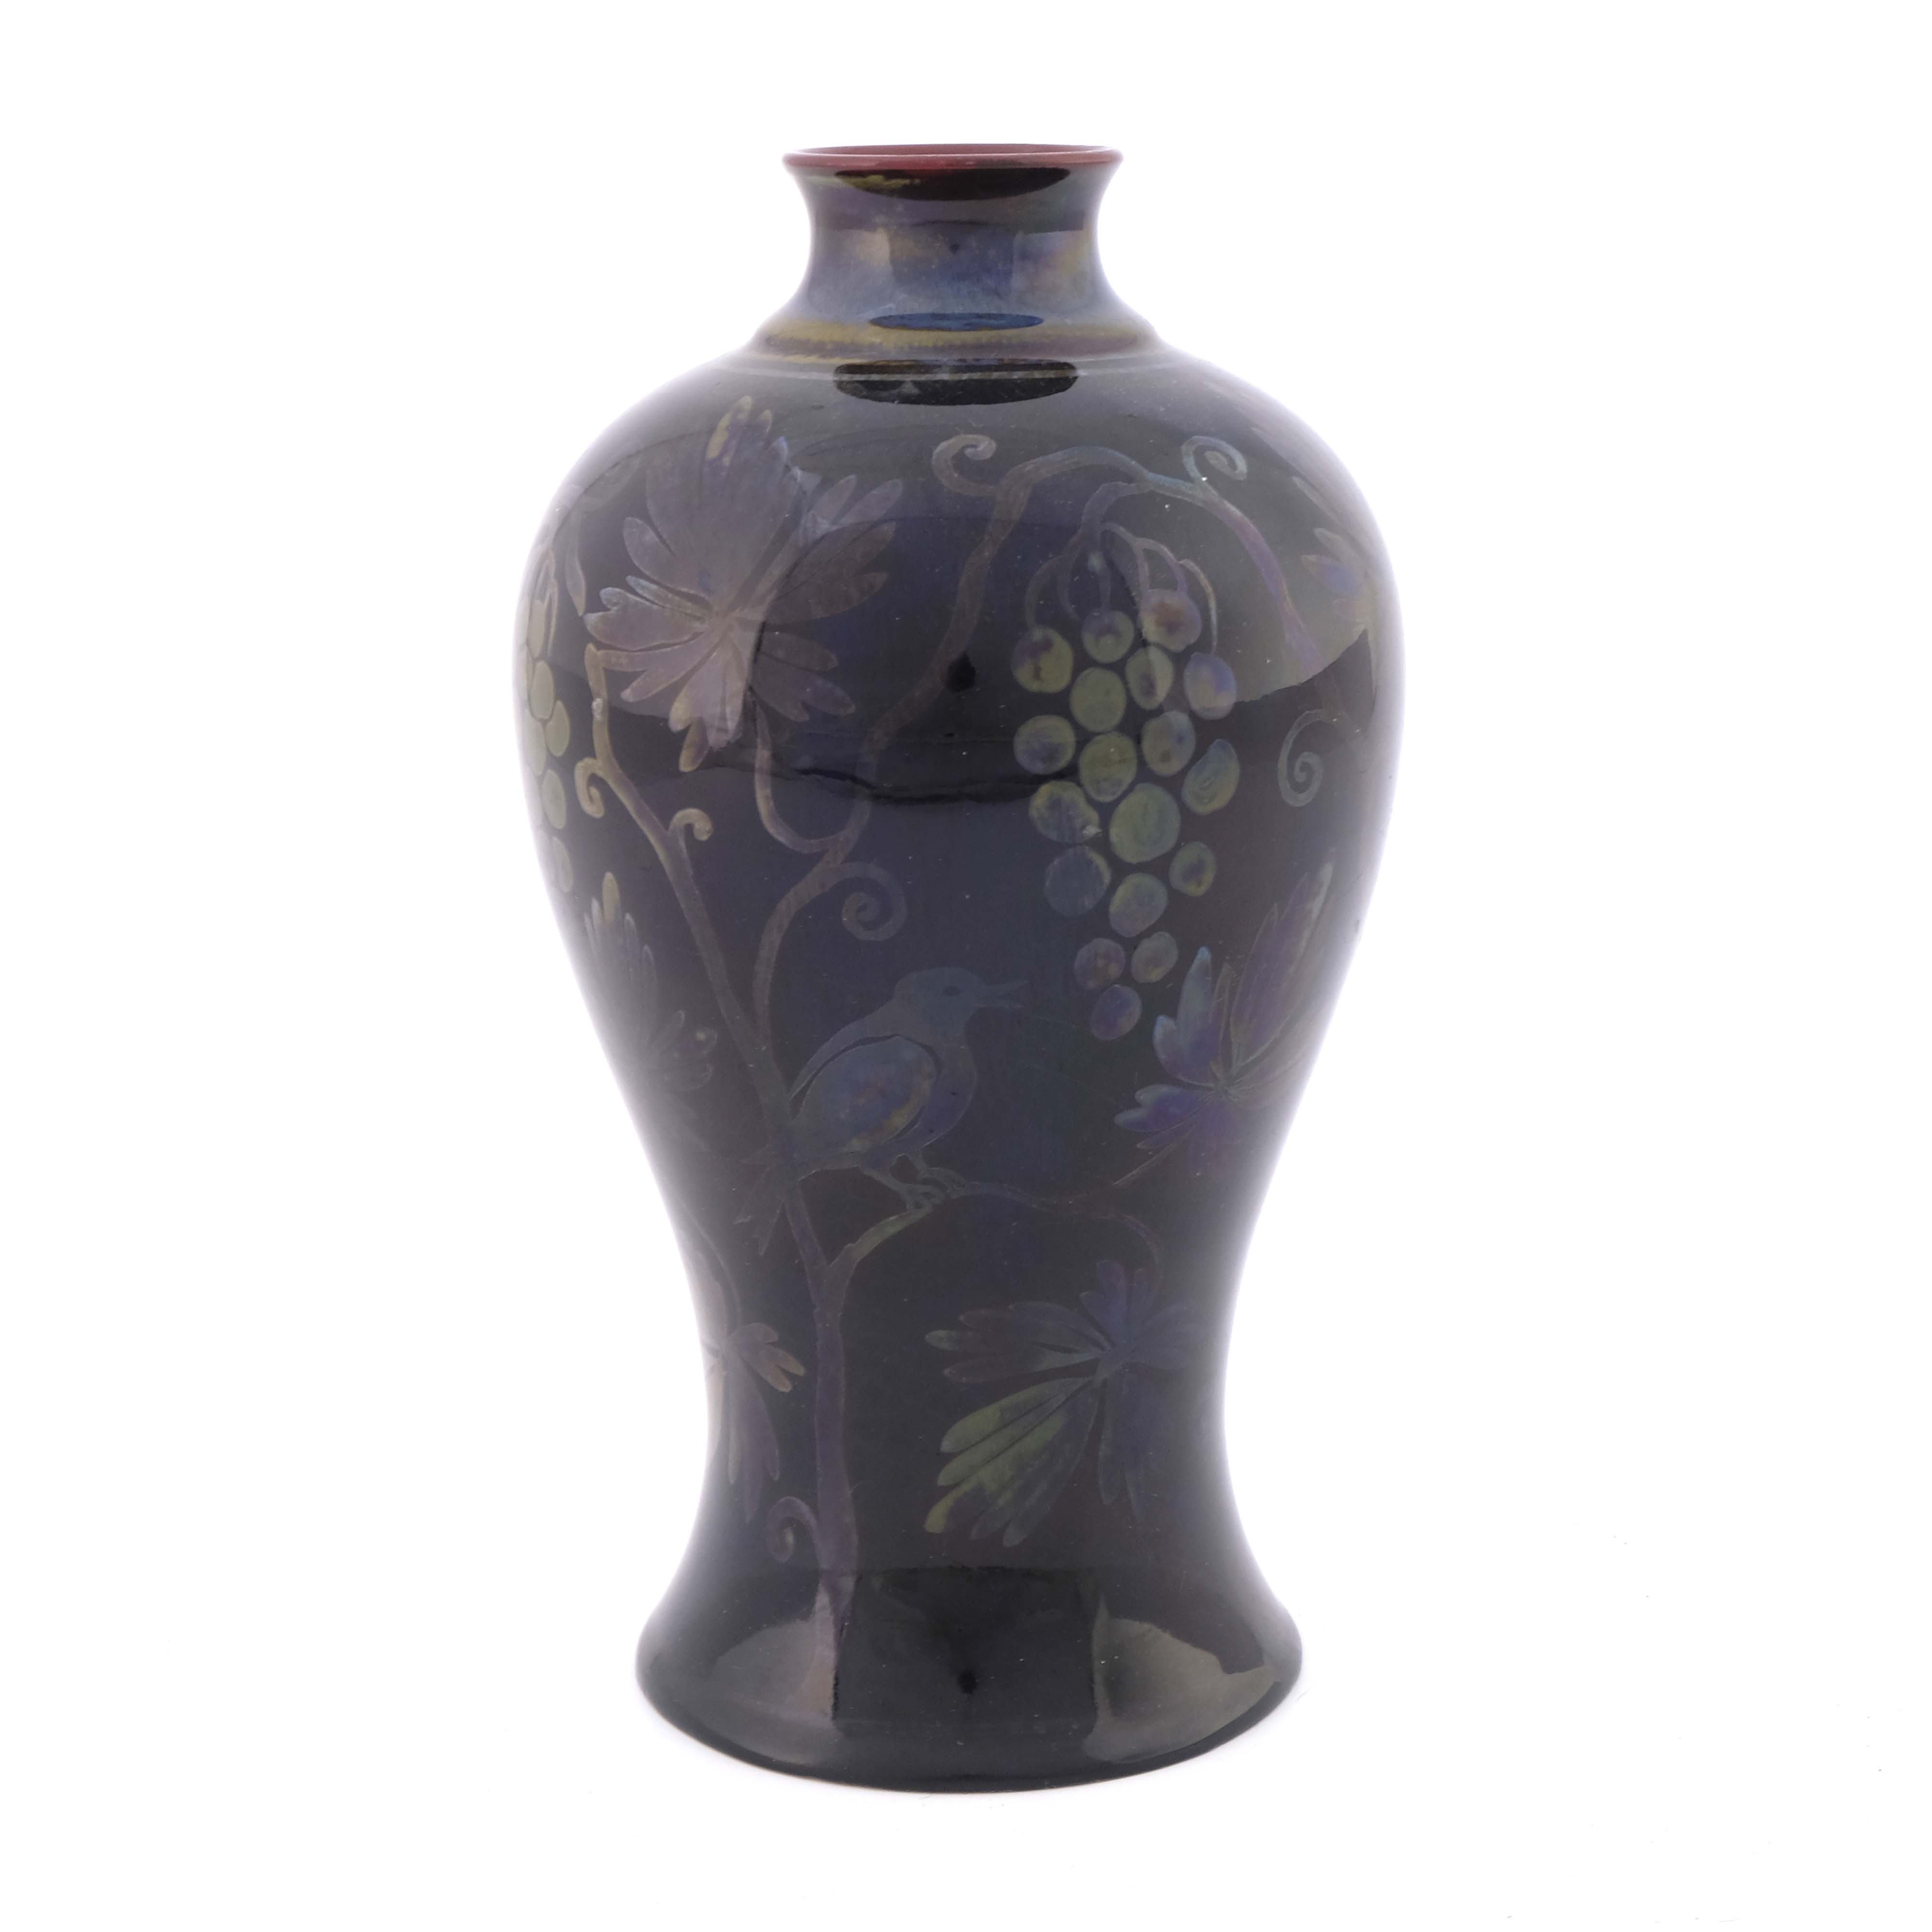 Bernard Moore, a lustre vase - Image 3 of 5